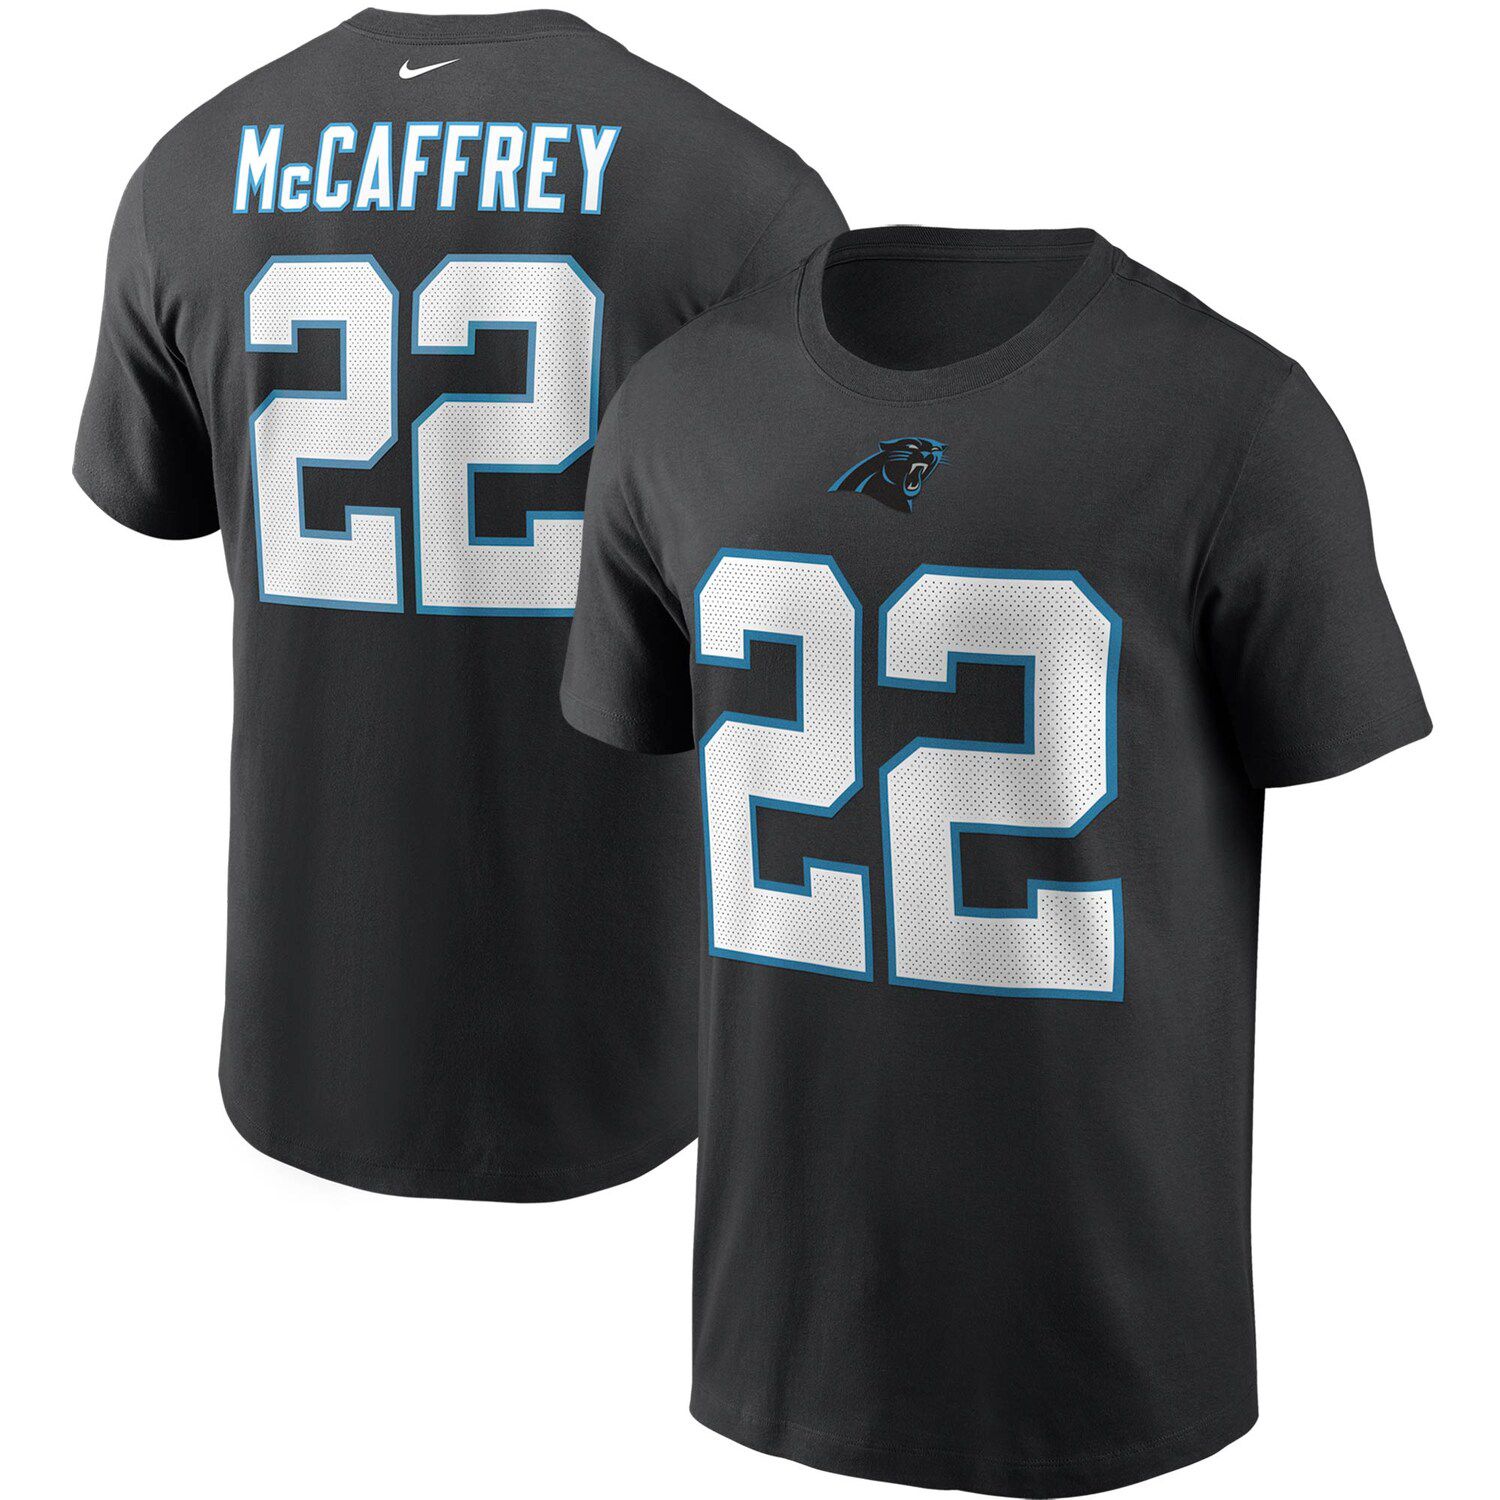 McCaffrey Christian kids jersey